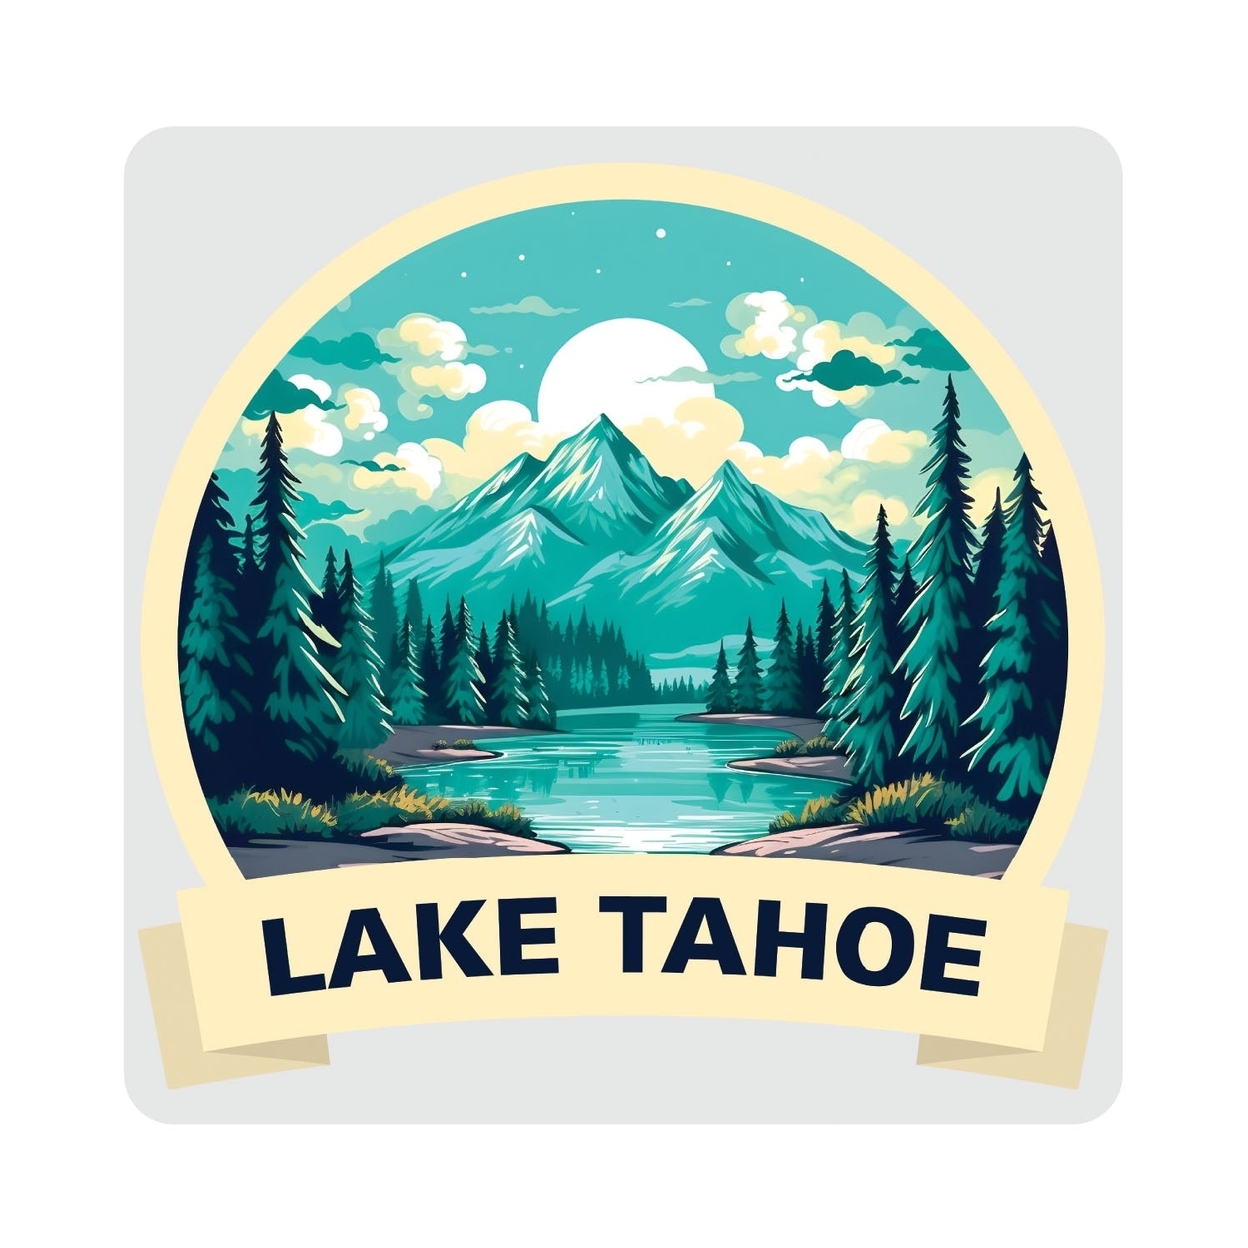 Lake Tahoe California Design A Souvenir 4x4-Inch Coaster Acrylic 4 Pack